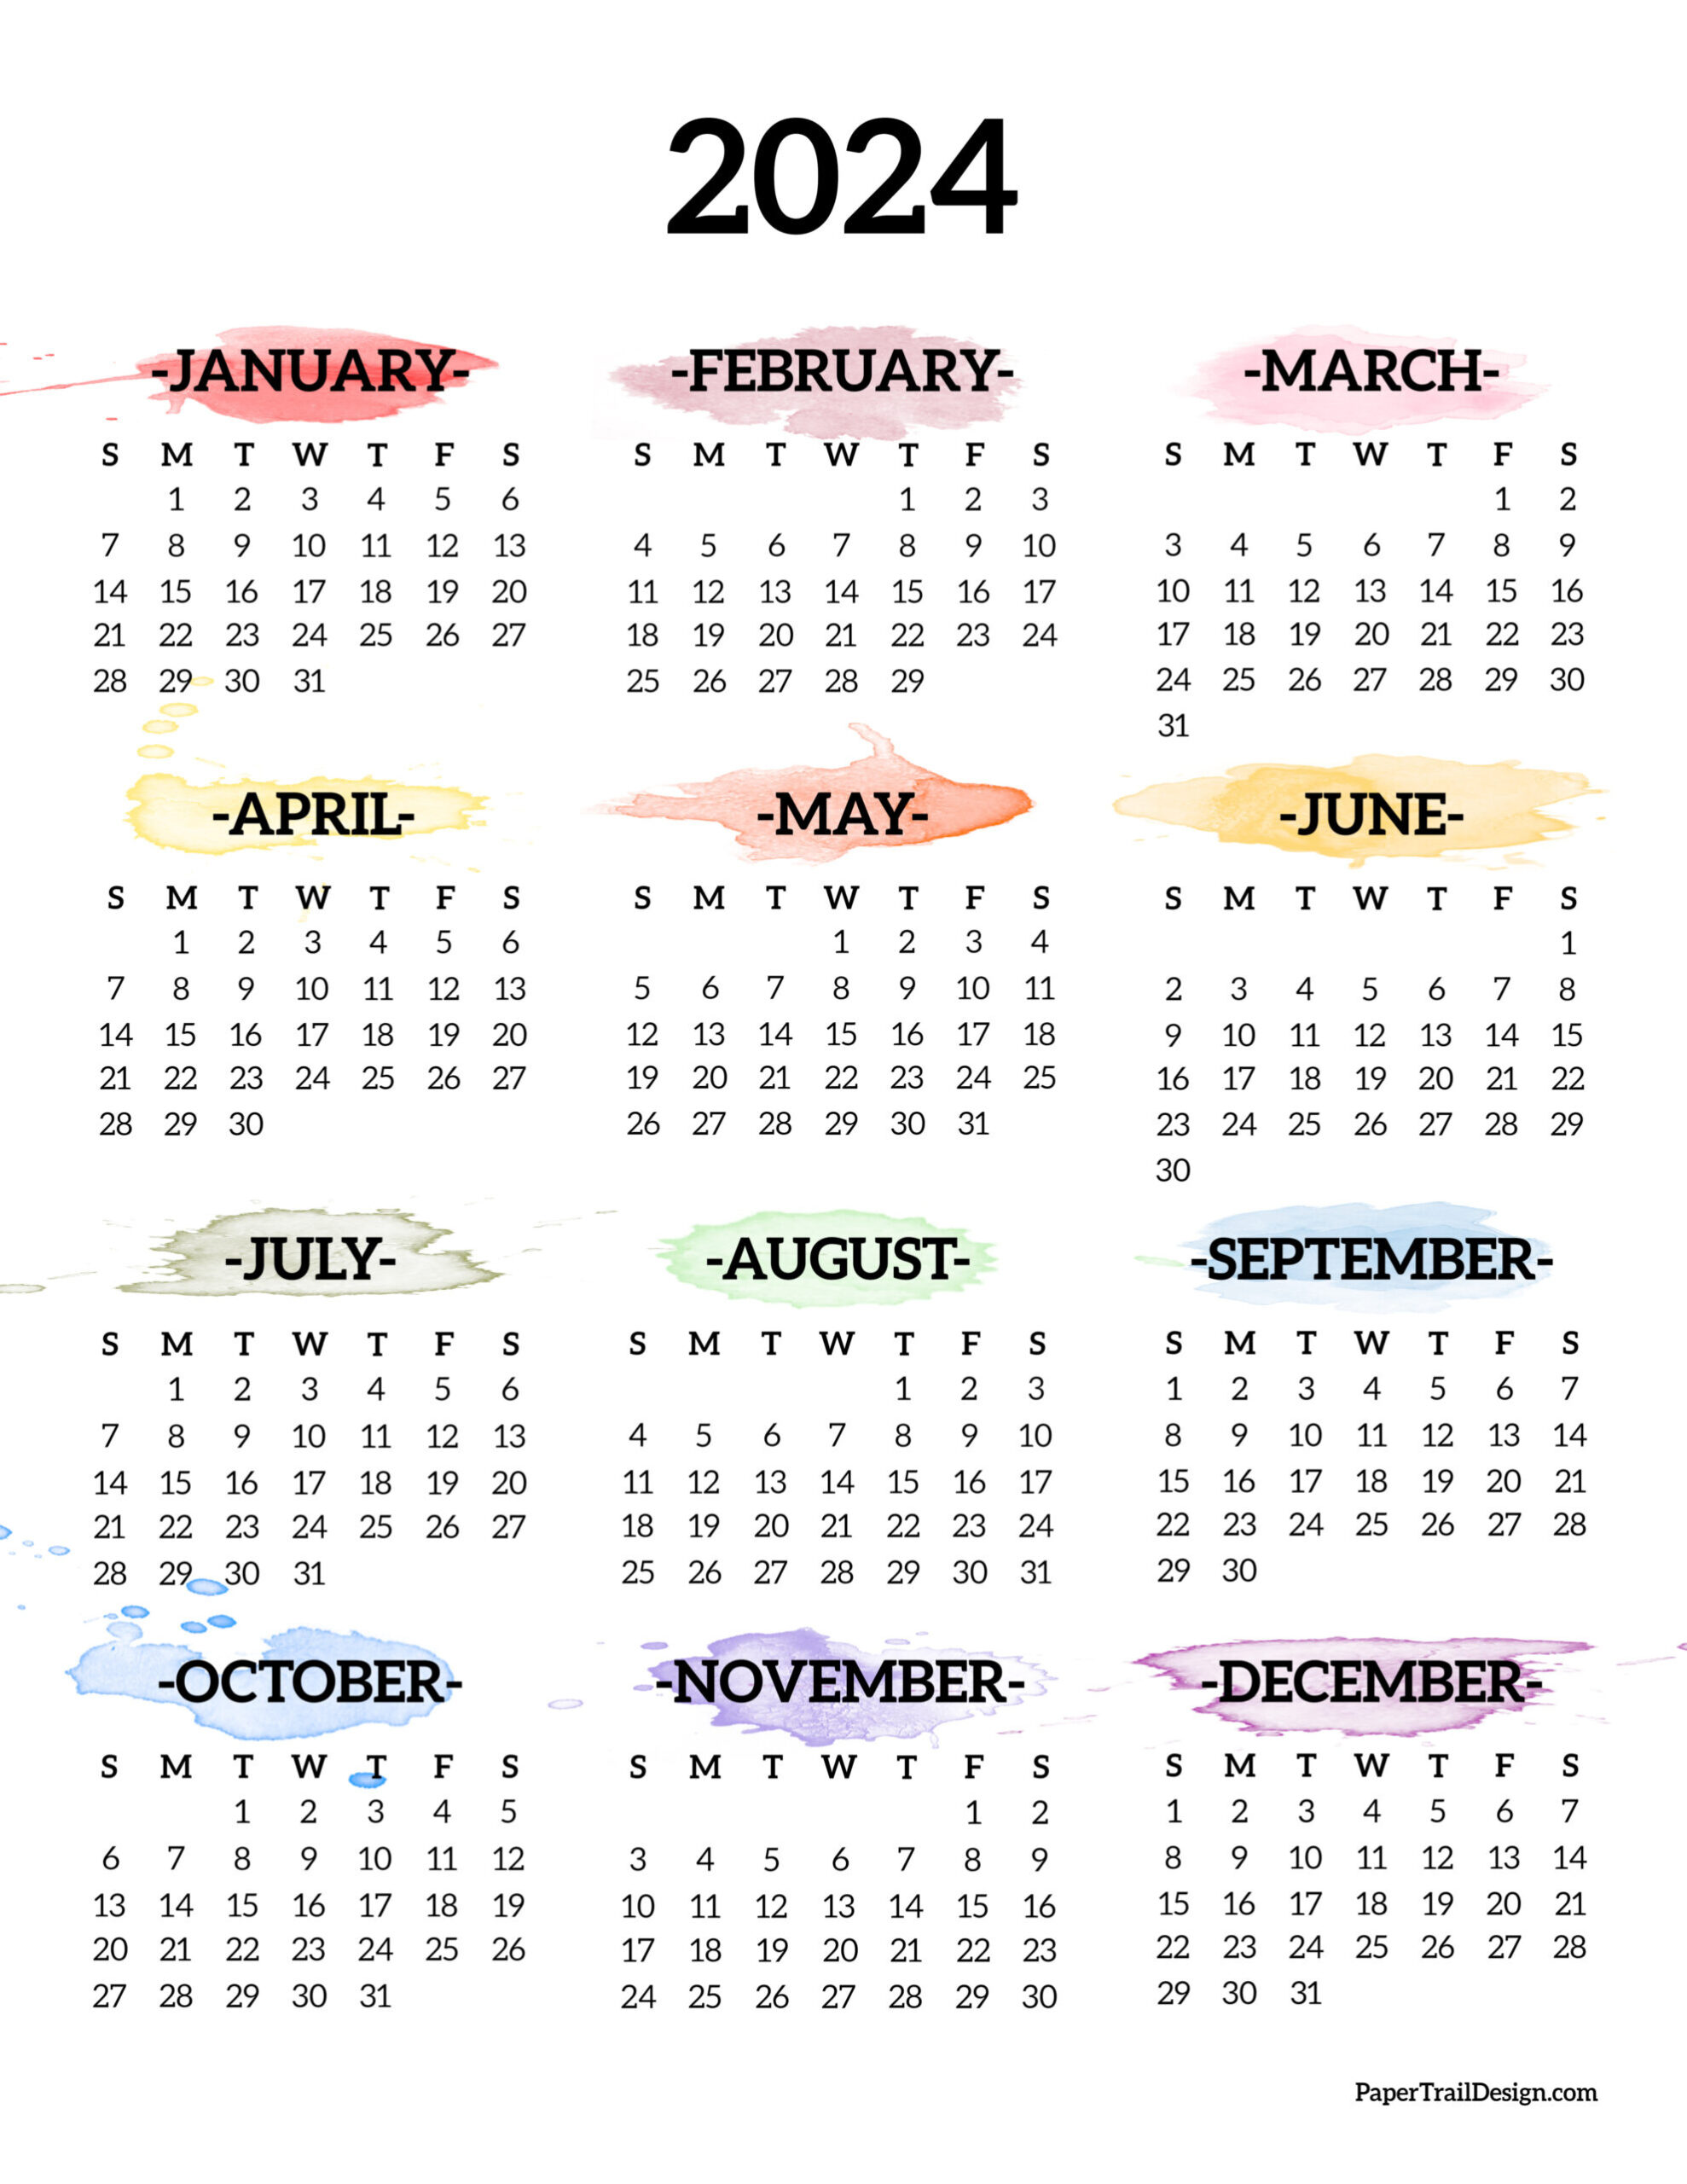 Calendar 2024 Printable One Page - Paper Trail Design inside Free Printable At A Glance Calendar 2024